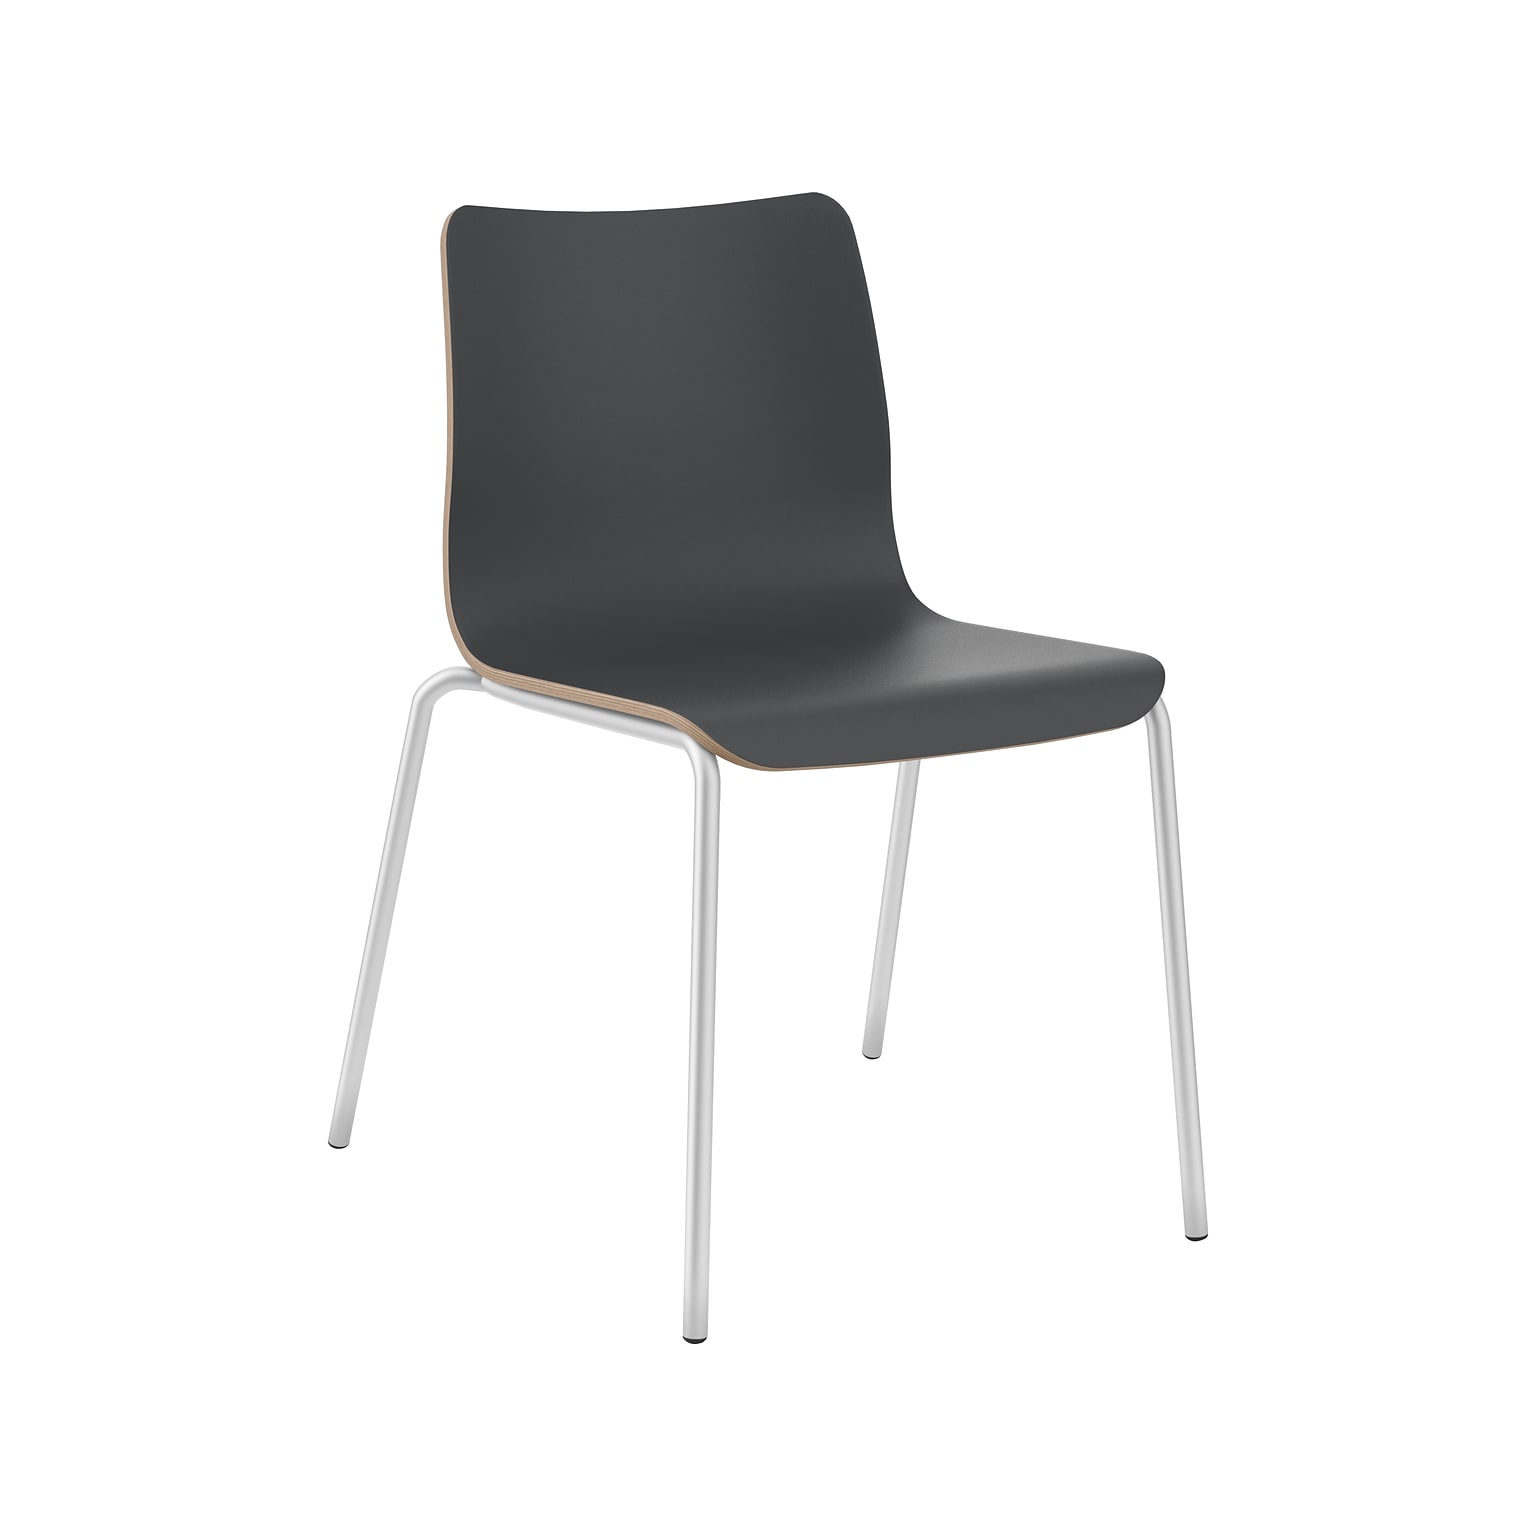 HON Ruck Modern Laminate Dining Chair, Charcoal (HRUCK1L.S.PR8)